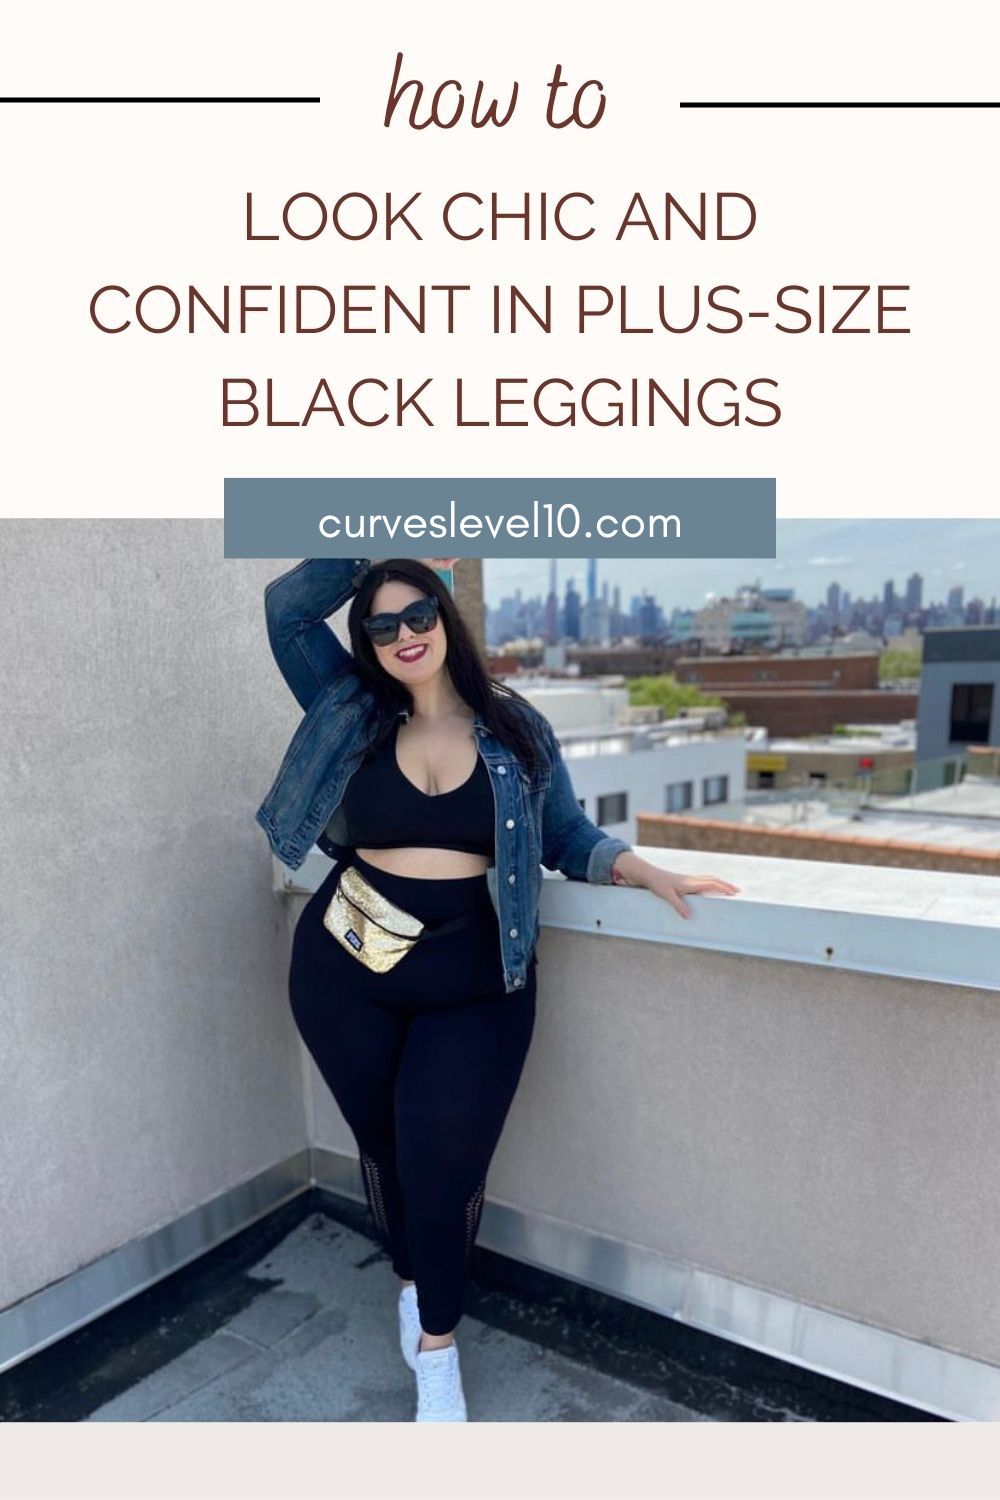 Plus-size black legging outfit